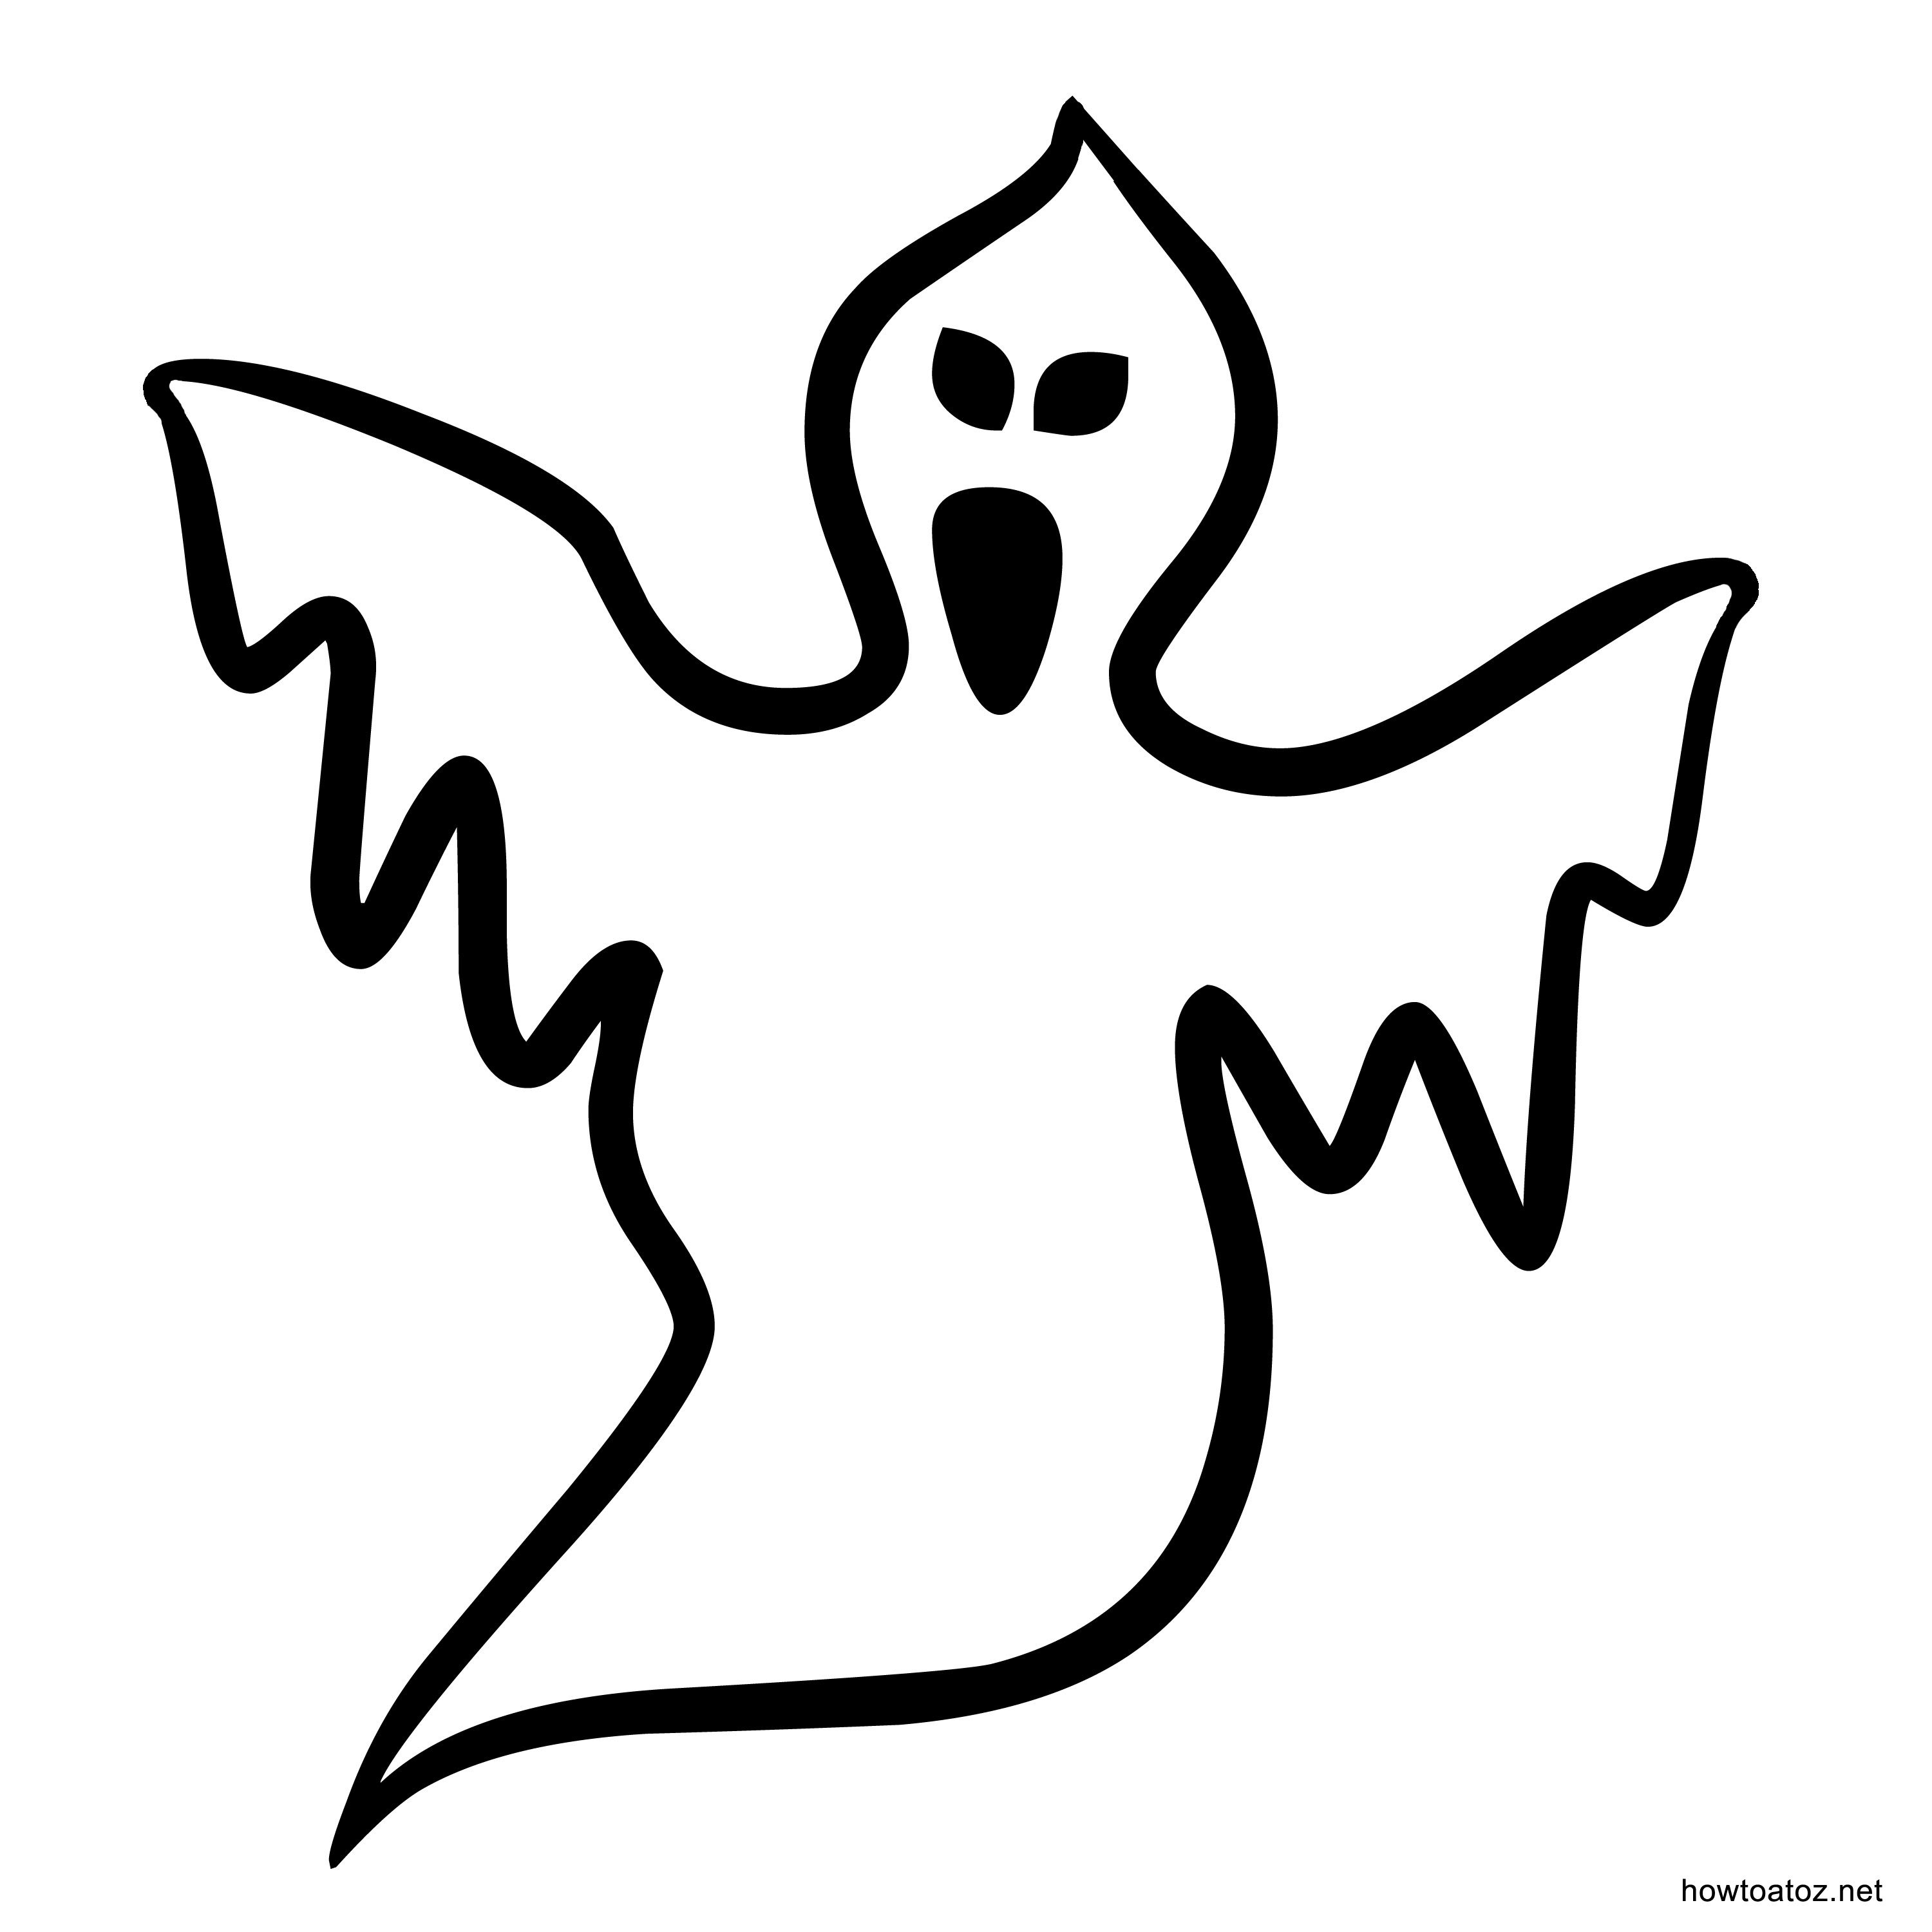 5 Best Images Of Free Printable Halloween Stencils - Free - Free Printable Pumpkin Stencils